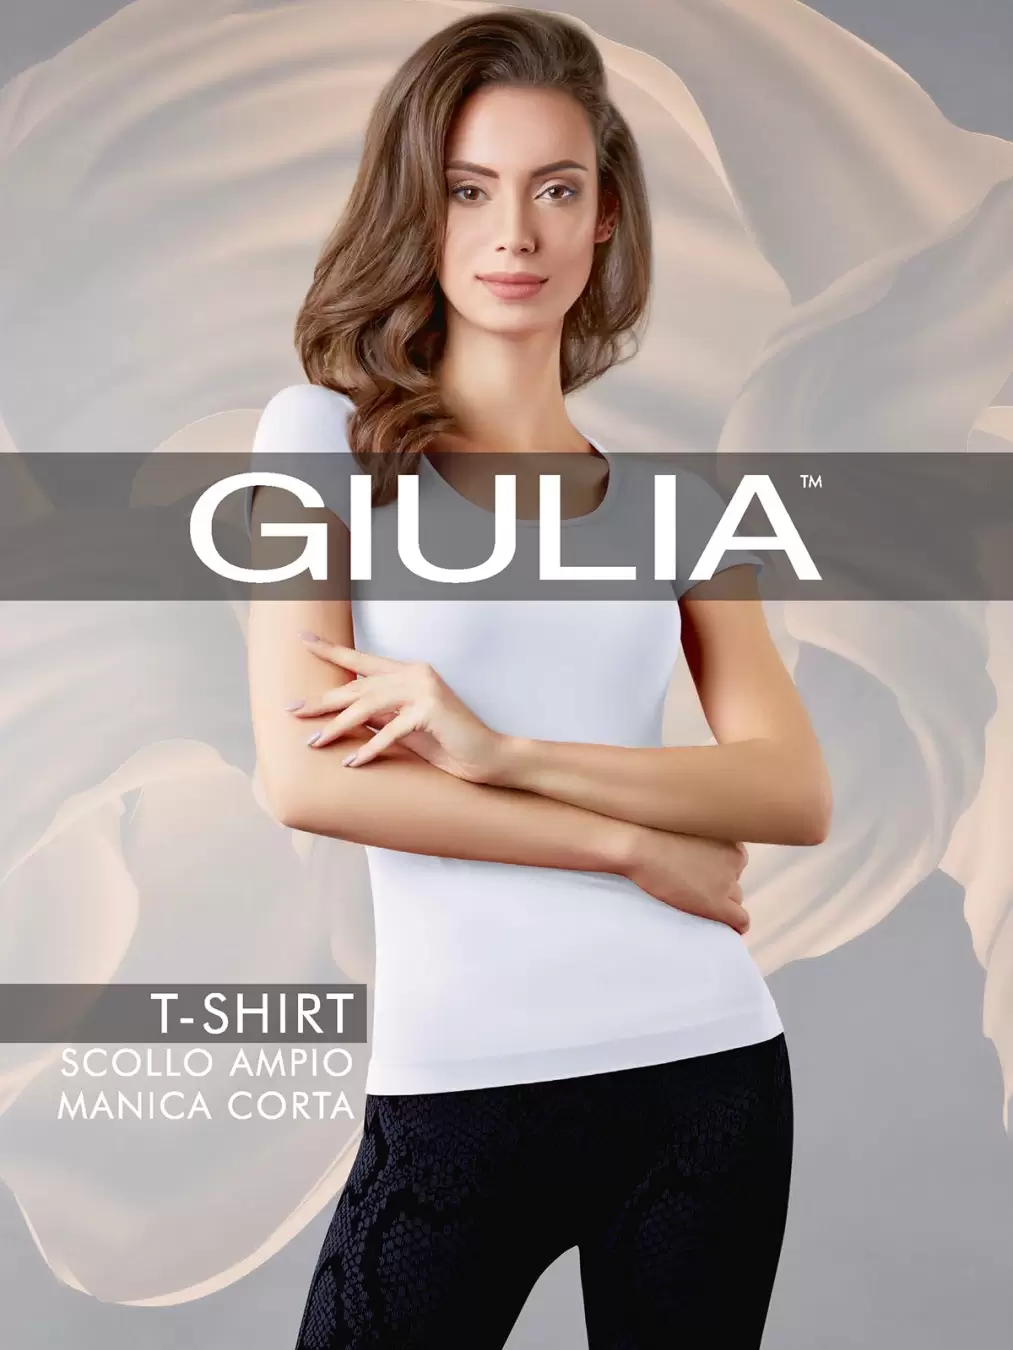 Giulia T-SHIRT SCOLLO AMPIO M.CORTA, футболка (изображение 1)